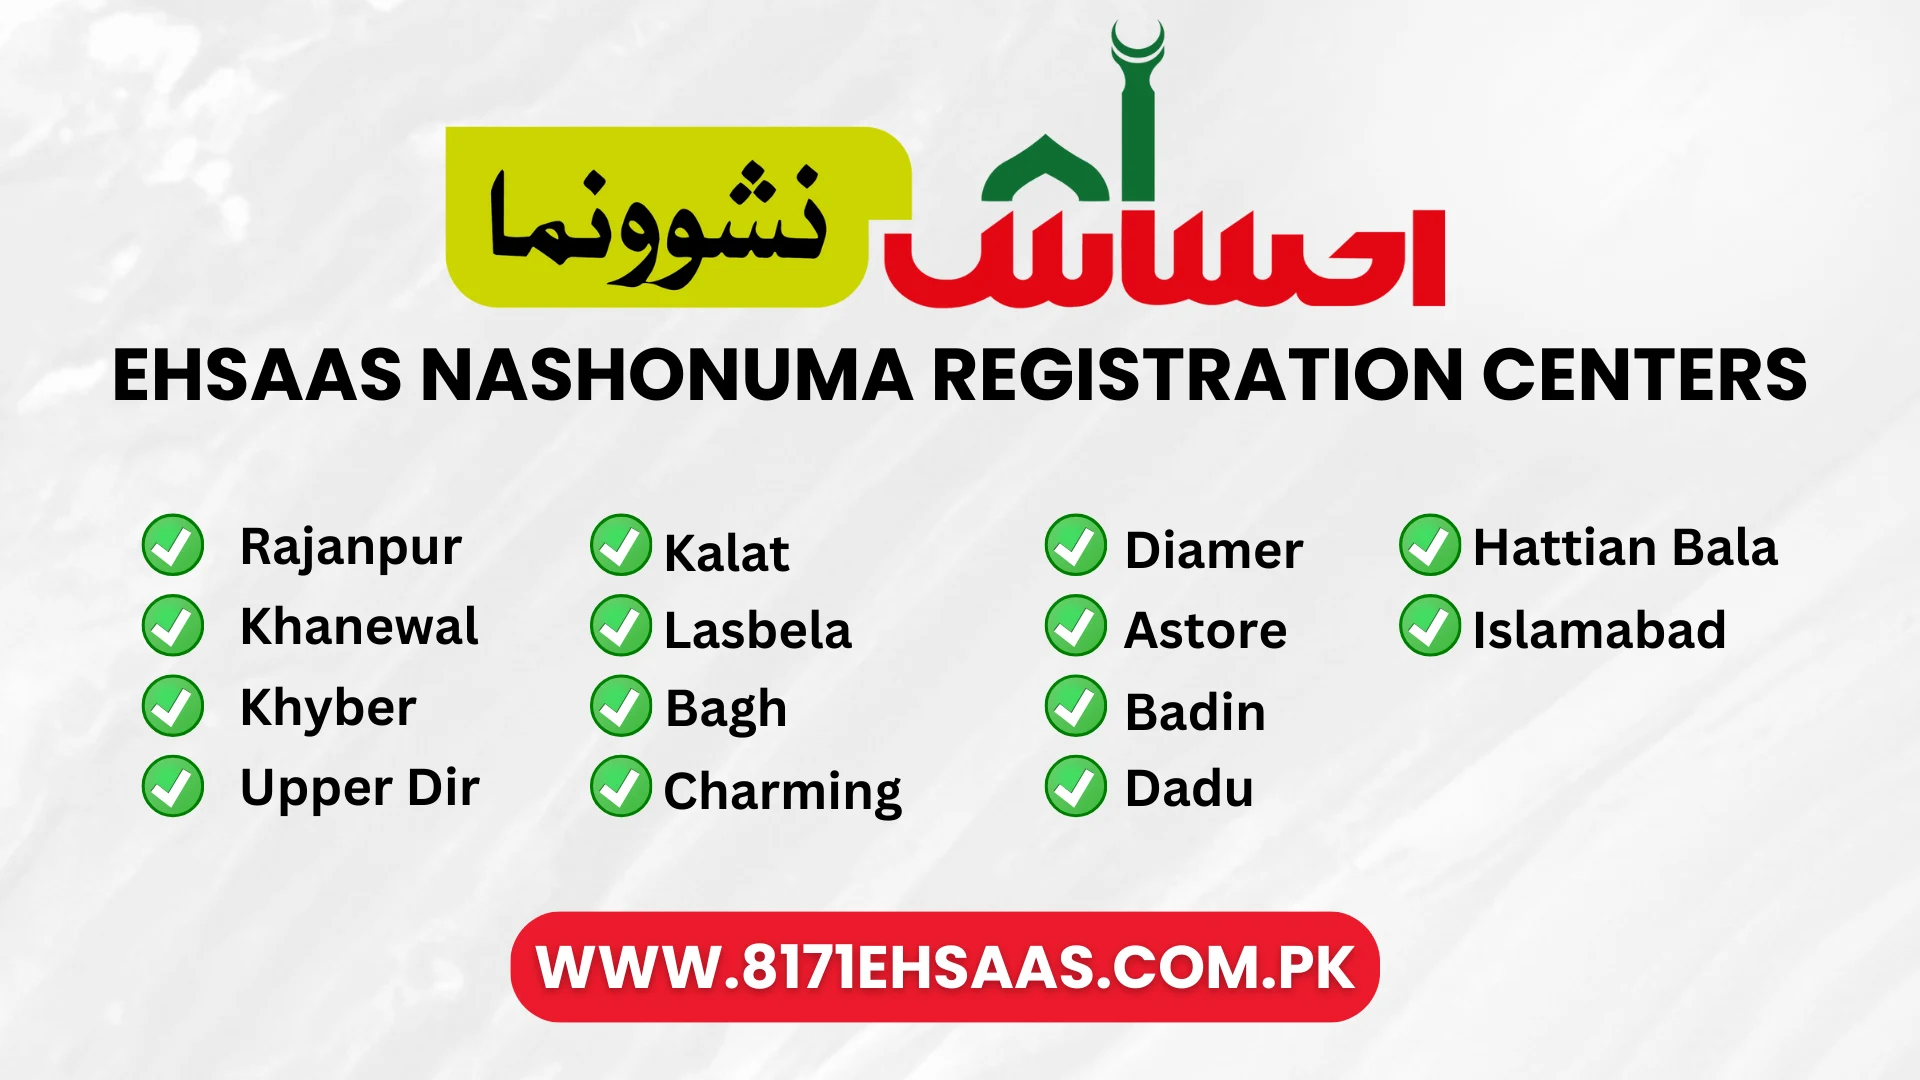 Ehsaas Nashonuma Registration Centers